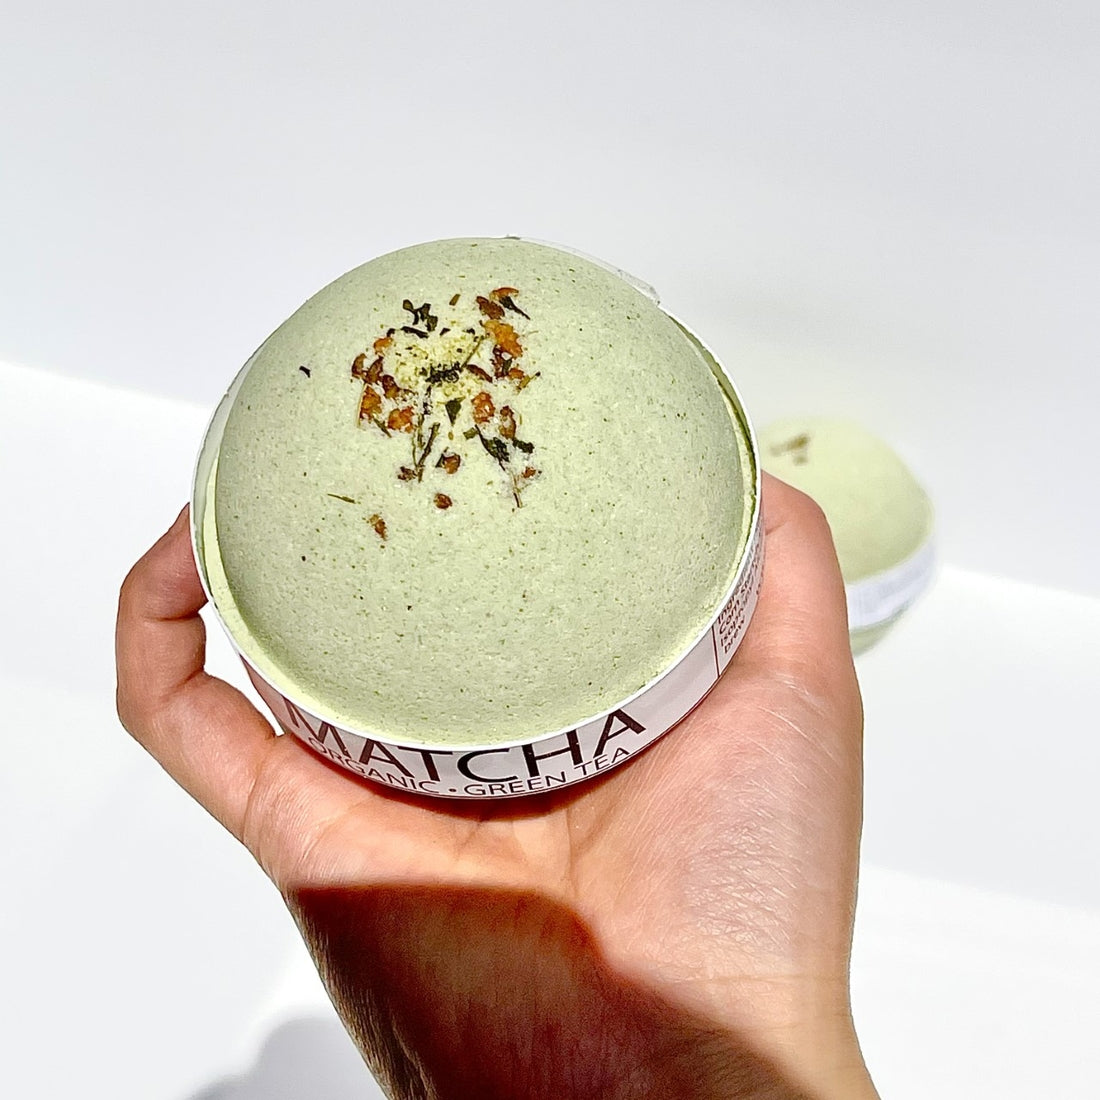 Matcha Green Tea Bomb